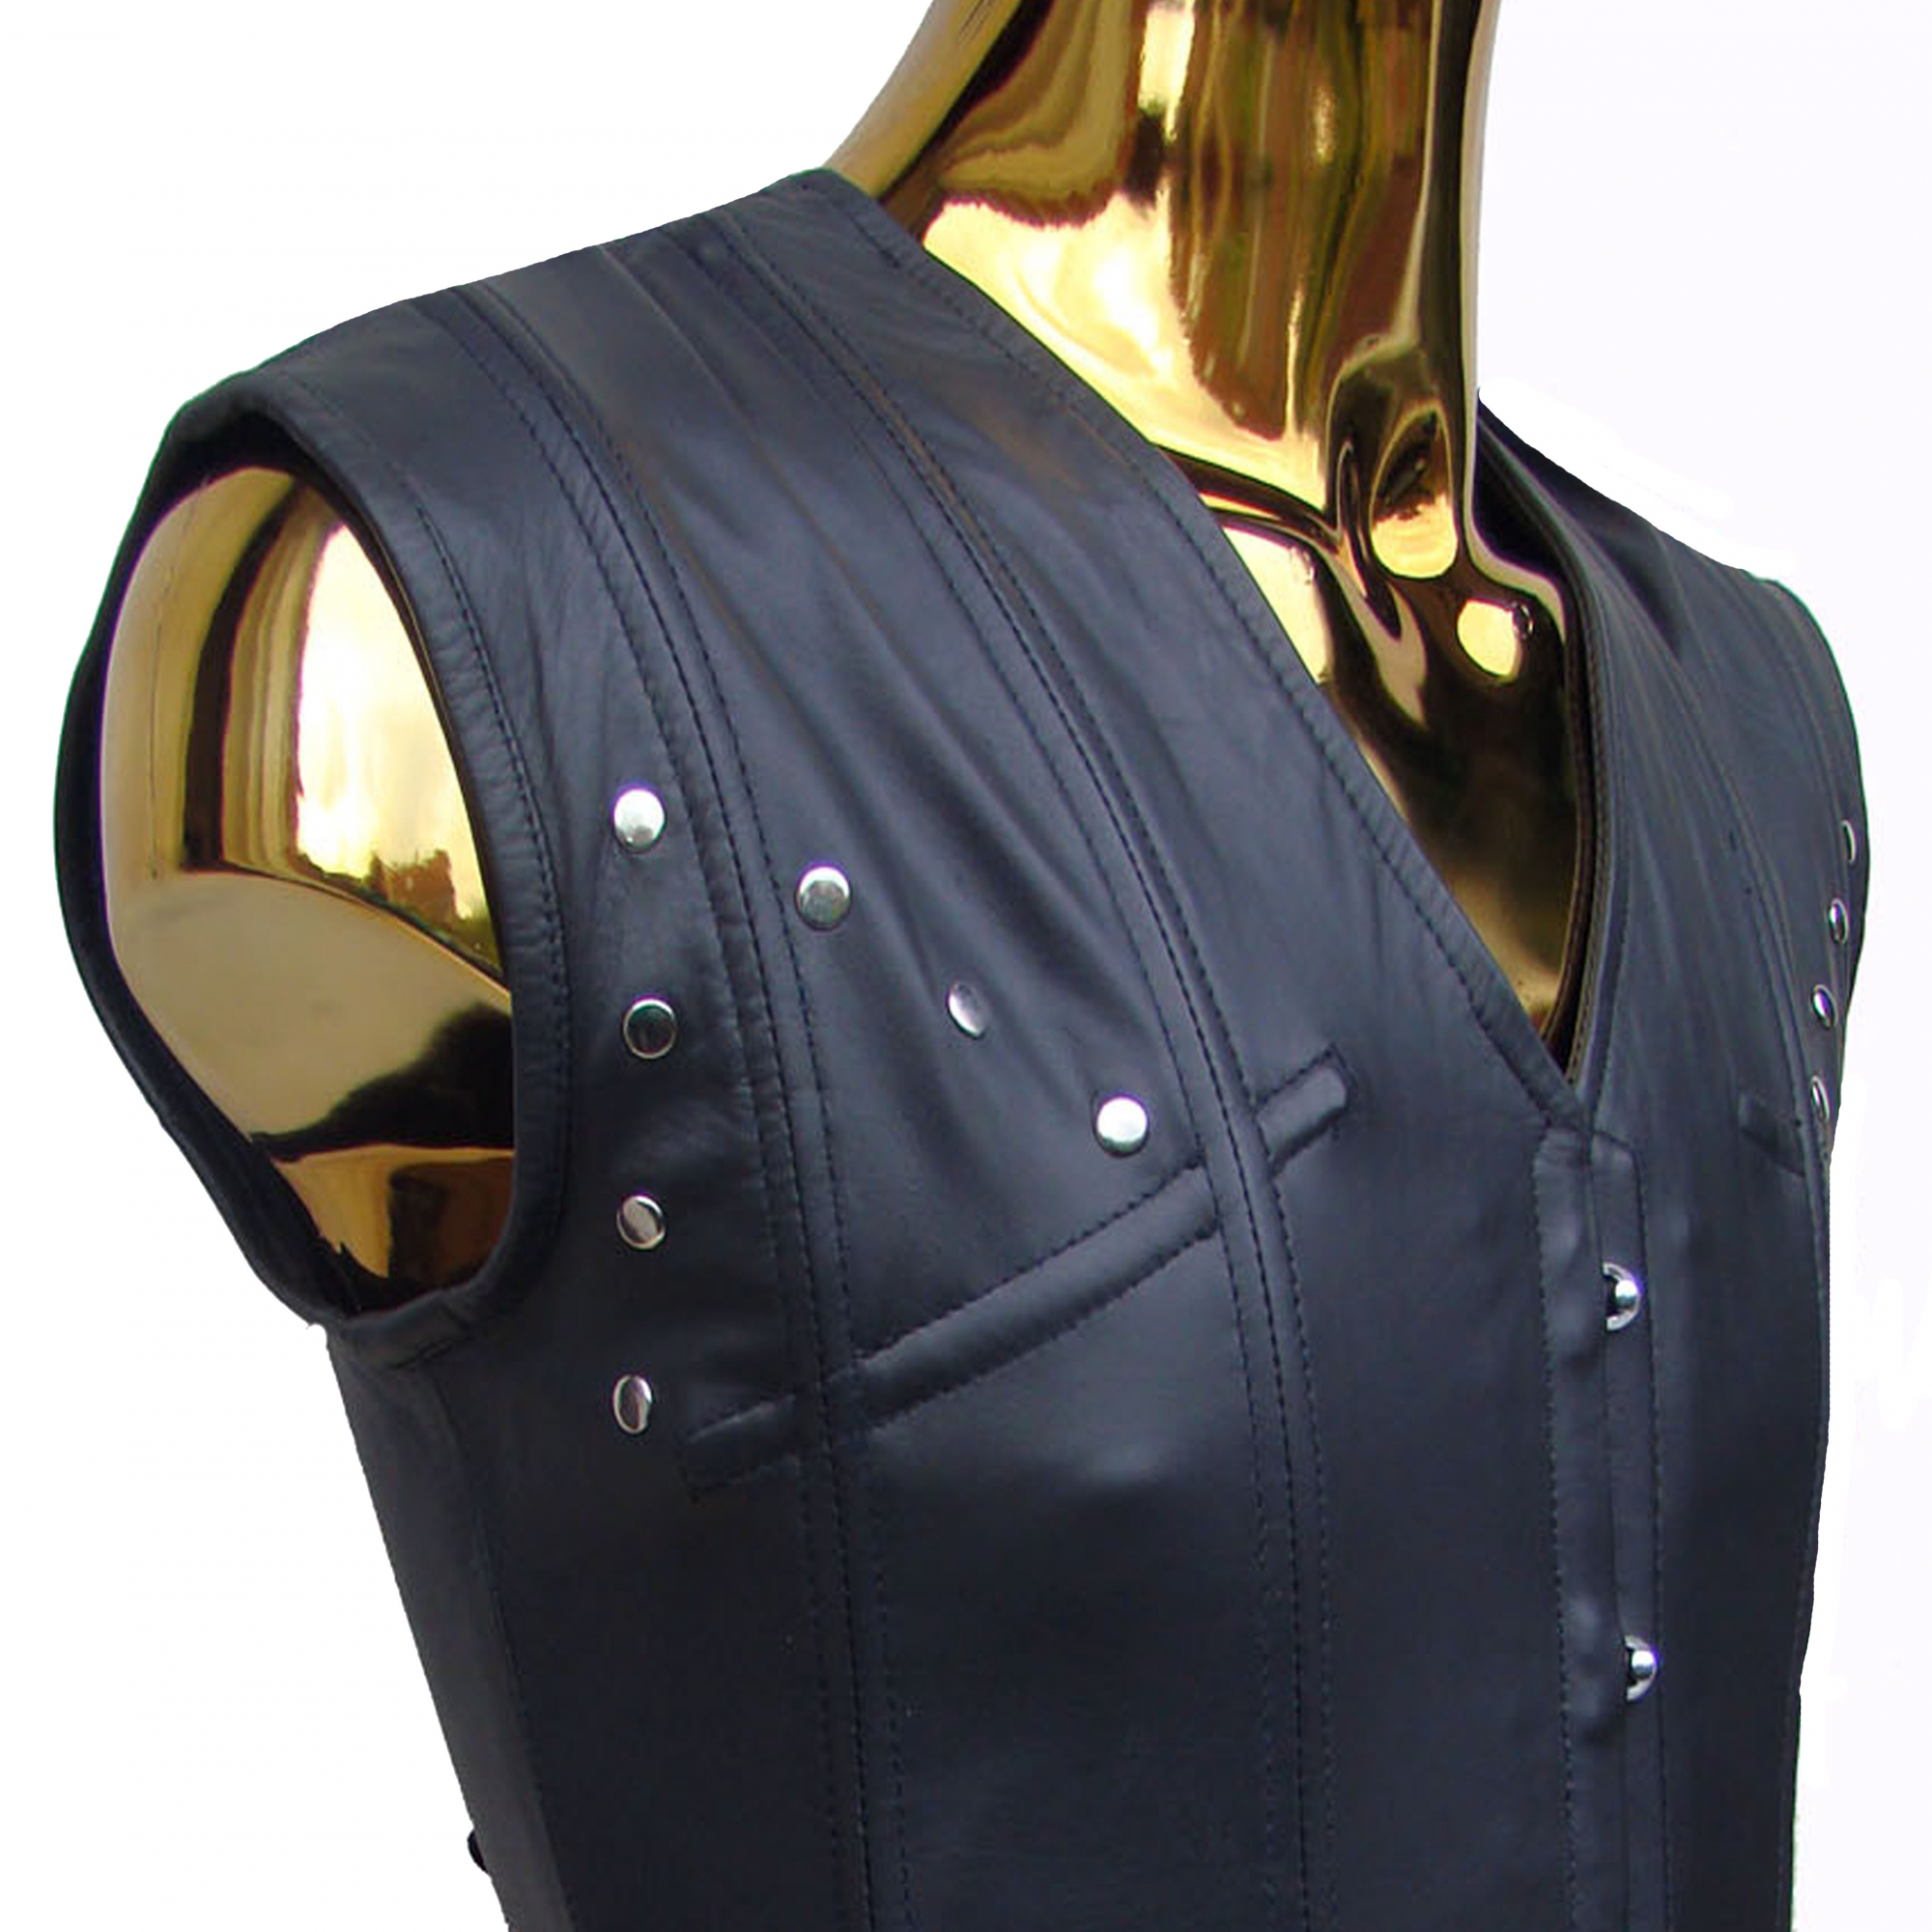  Schwarzer Herren Korsett Body Modell ROG 018 Rena Dreams  genuine leather men corset